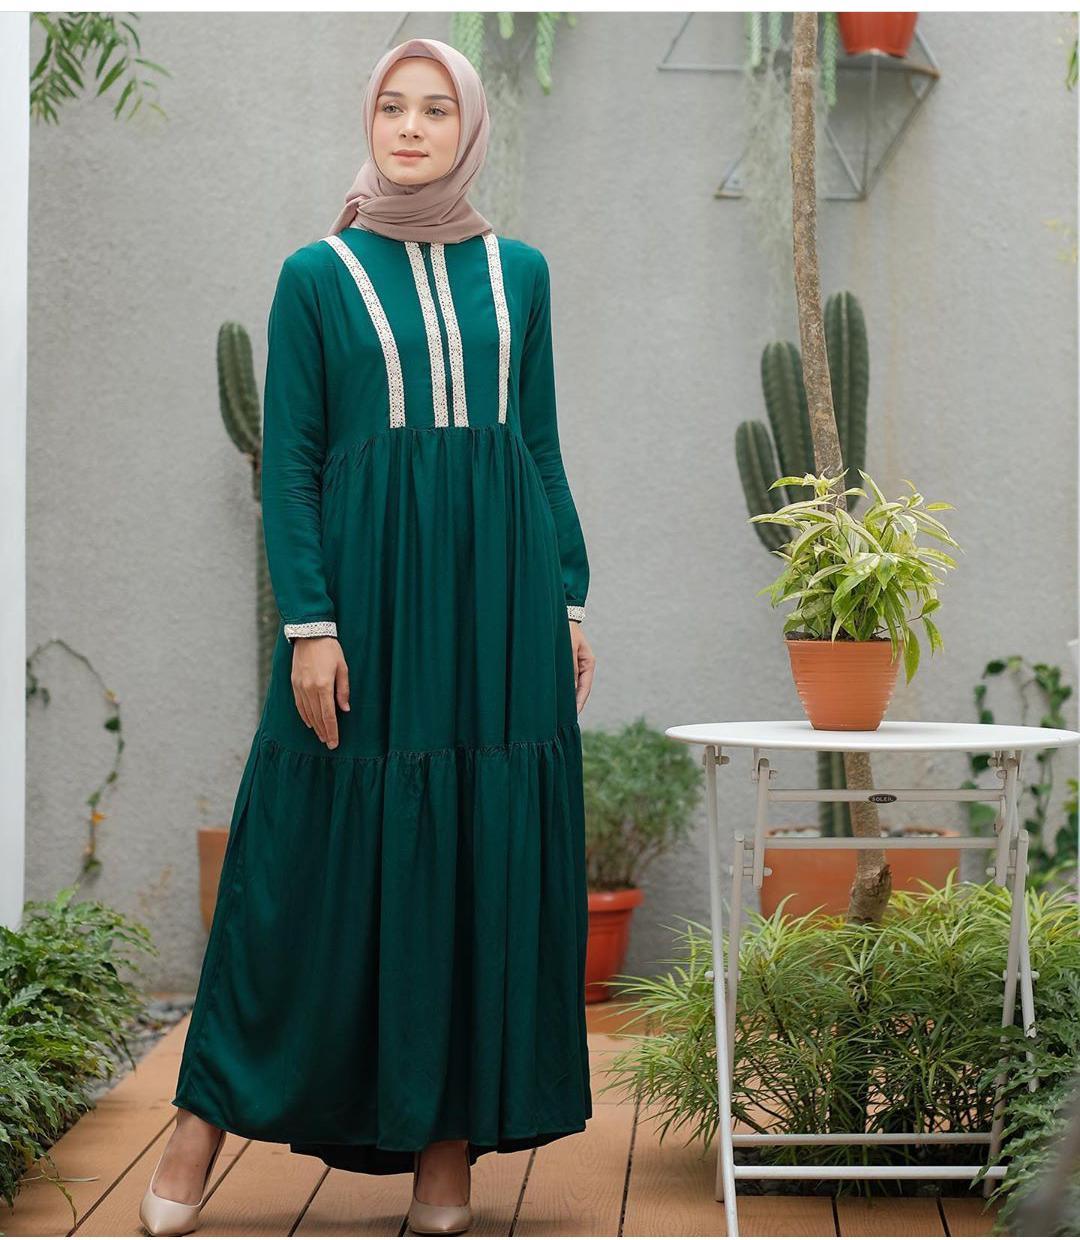 Baju Muslim Modern Gamis ALEXA MAXY Moscrepe Terusan Wanita Paling Laris Dan Trendy Baju Panjang Polos Muslim Dress Pesta Terbaru Maxi Muslimah Termurah Pakaian Modis Simple Casual Terbaru 2019